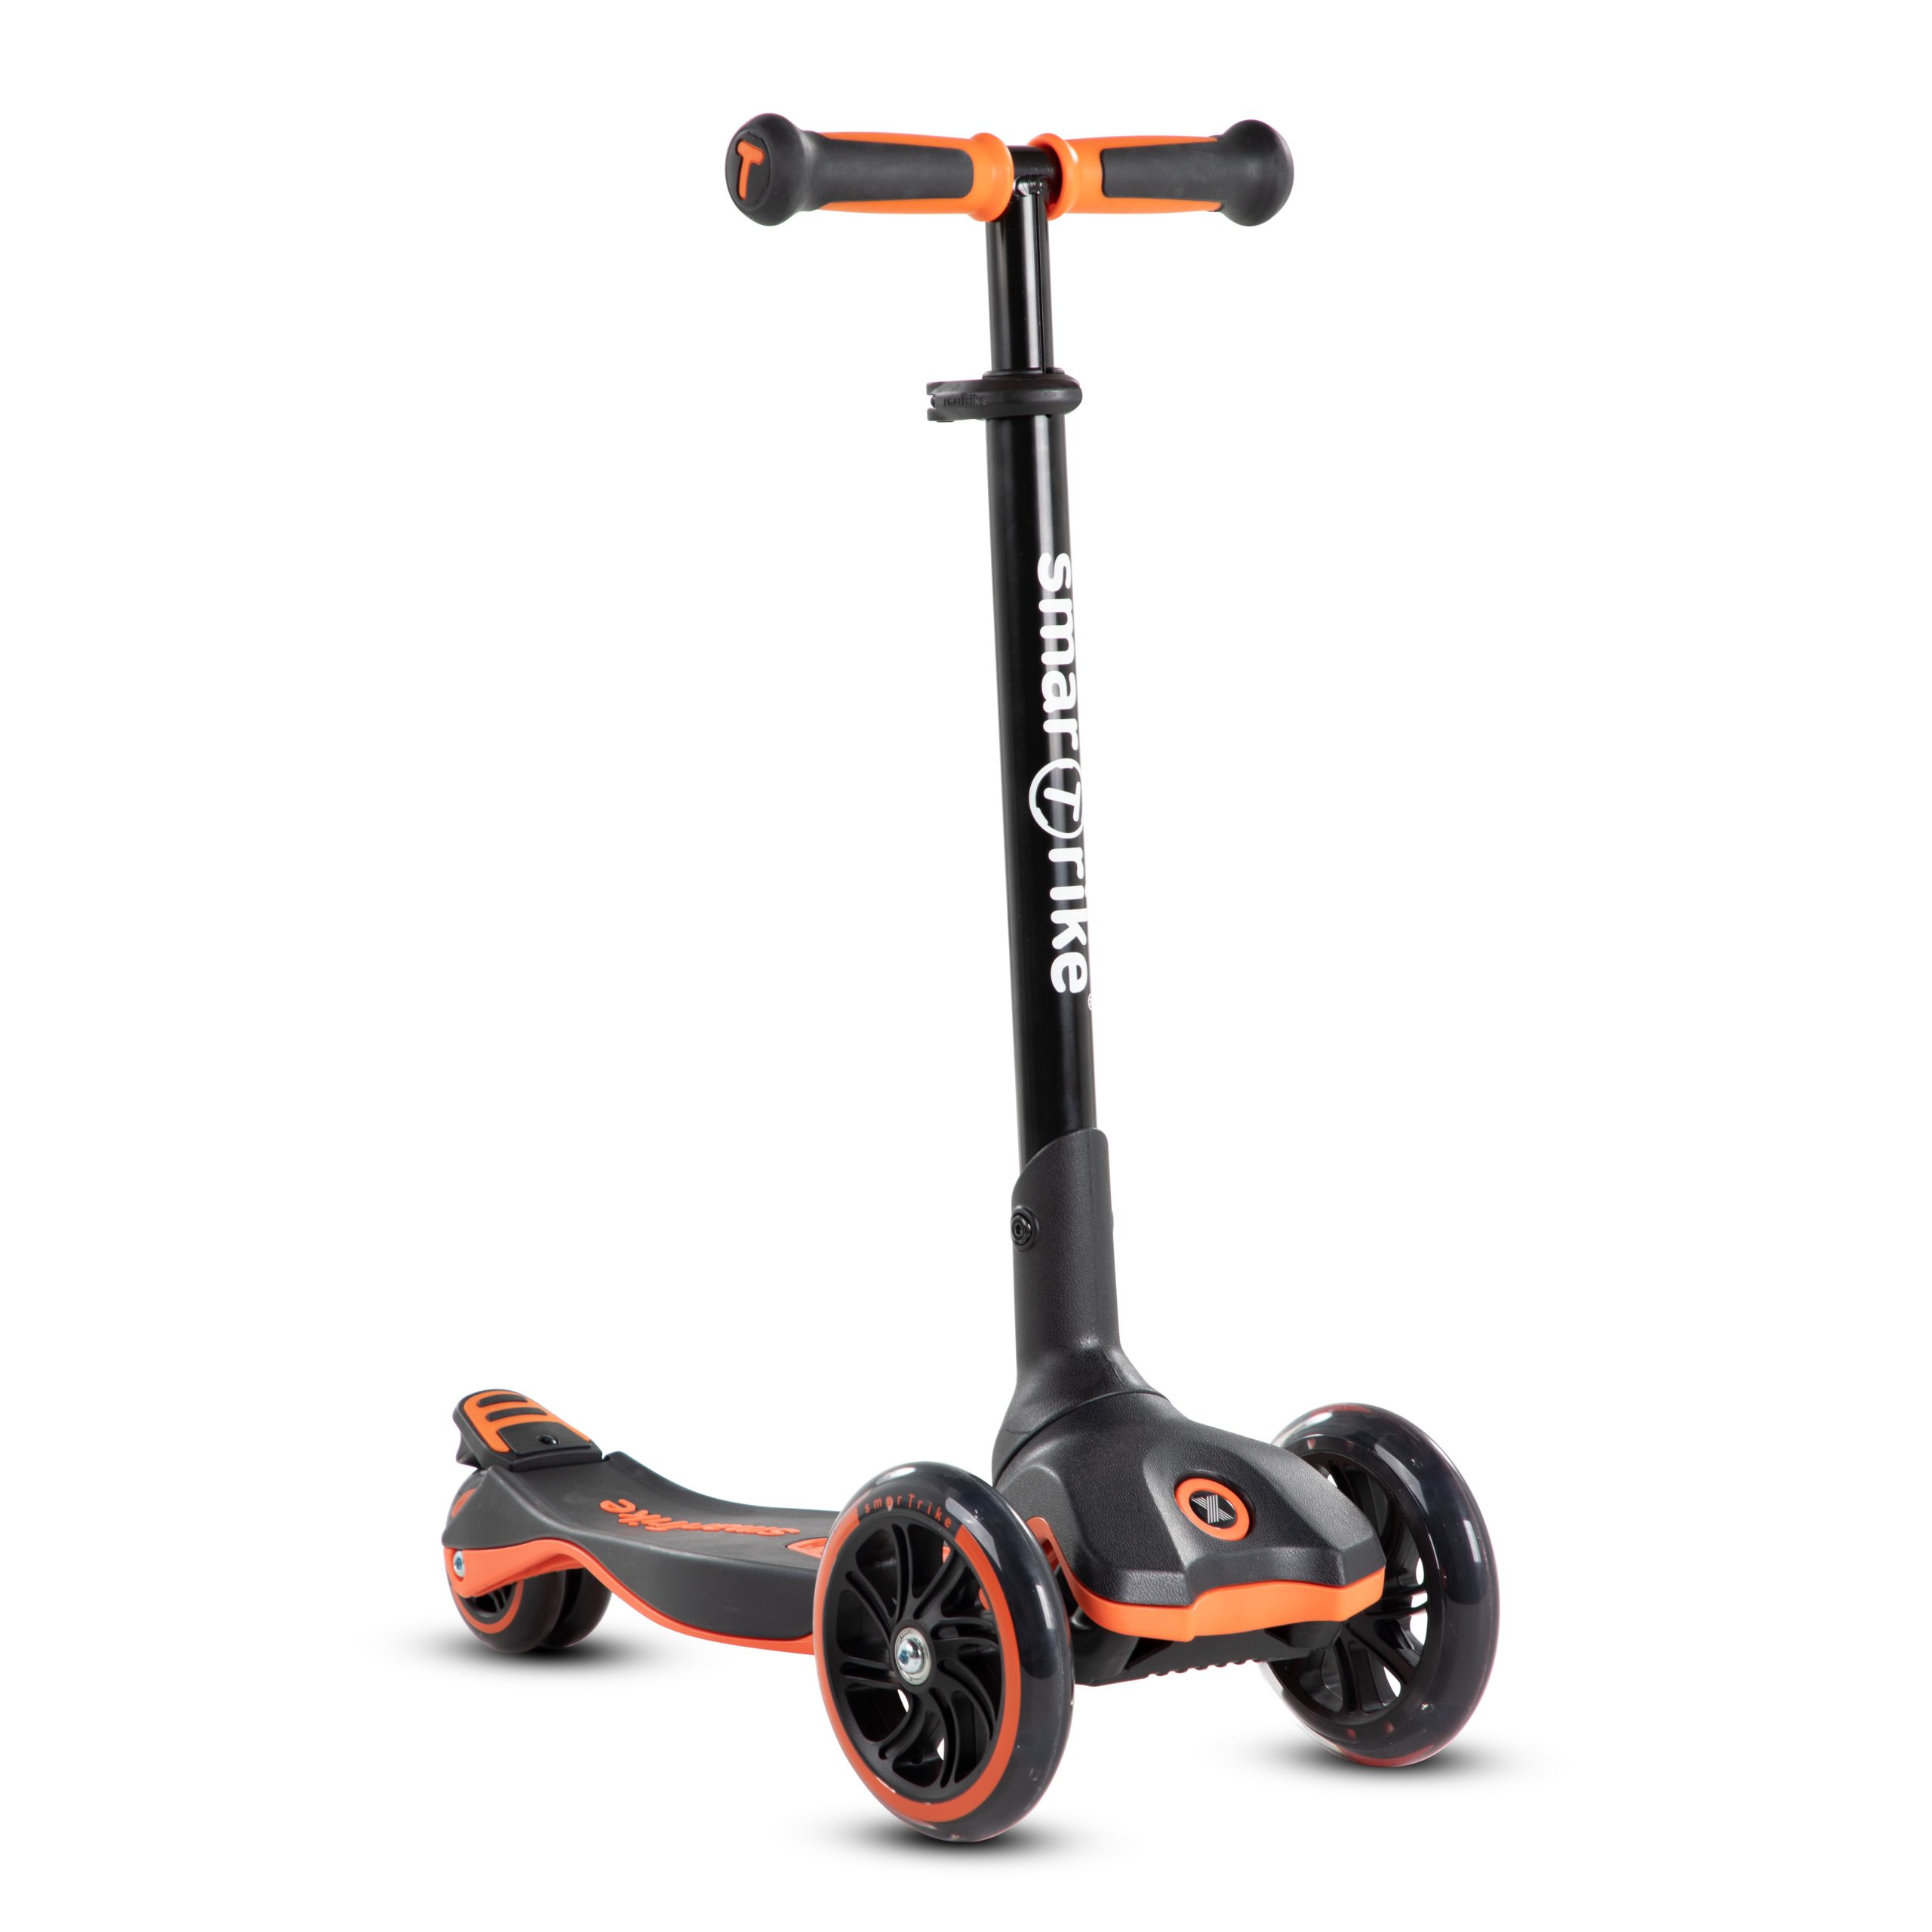 xtend scooter orange_main_s1